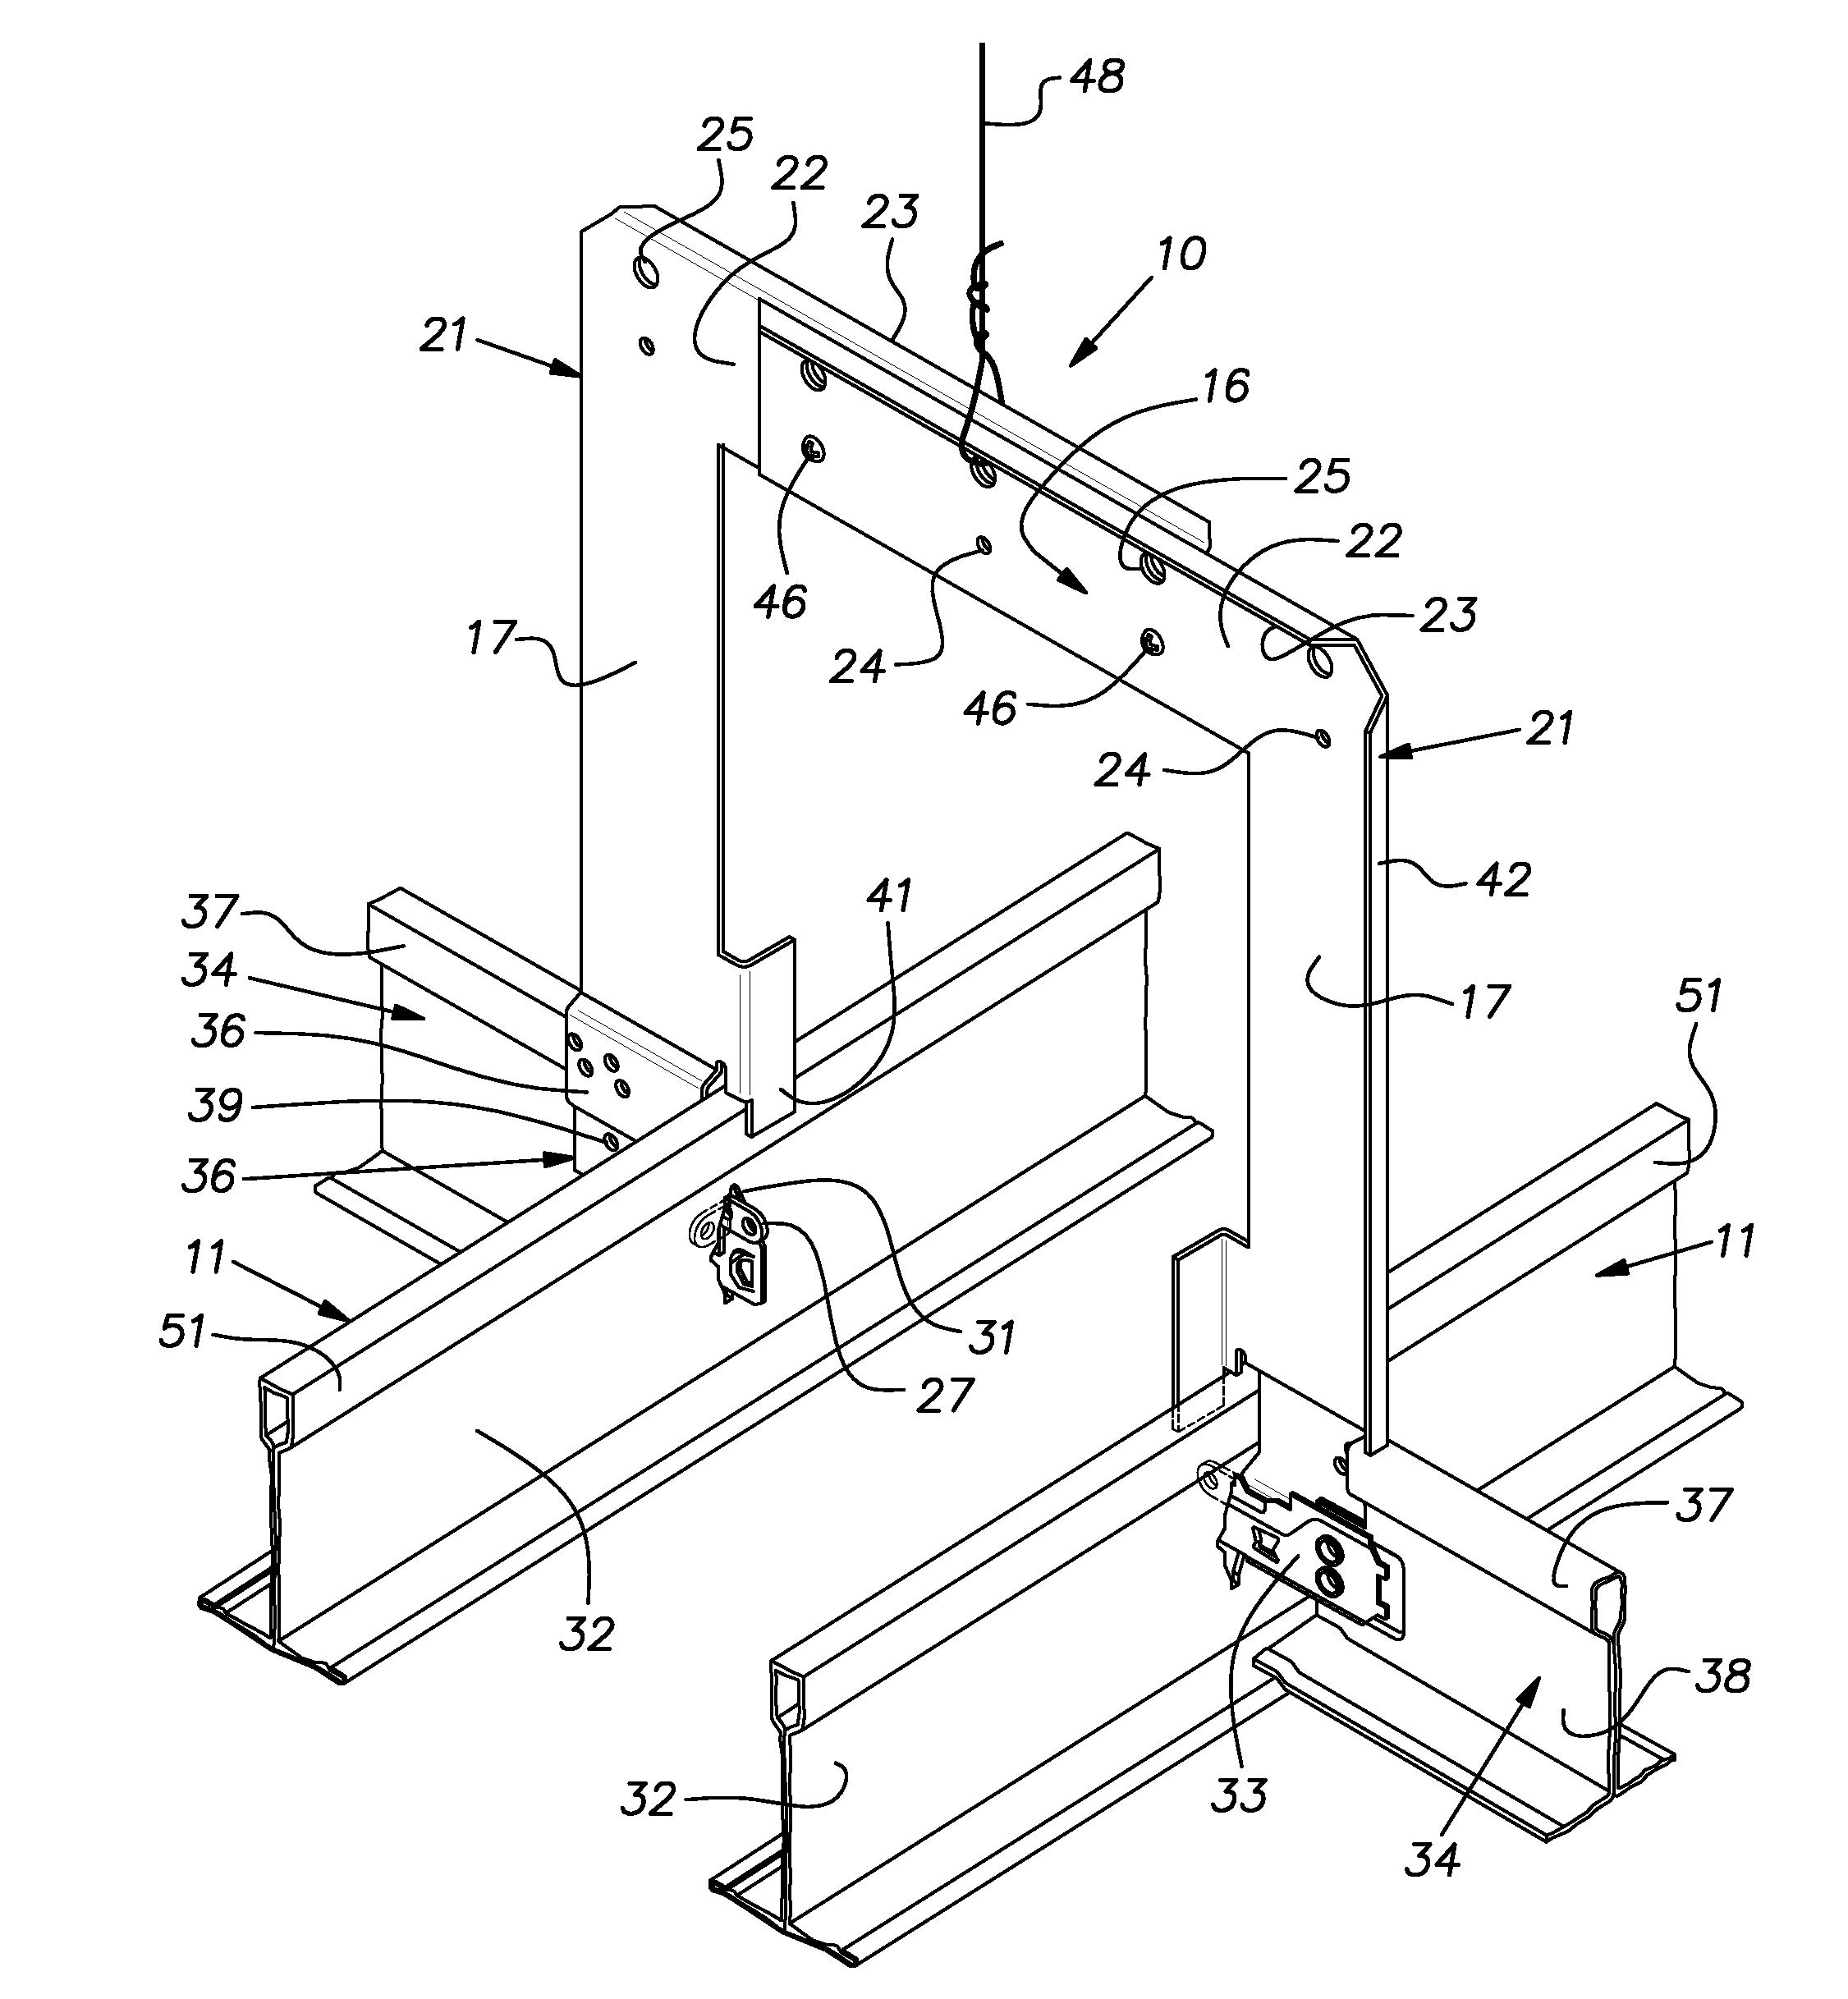 Two-piece modular yoke